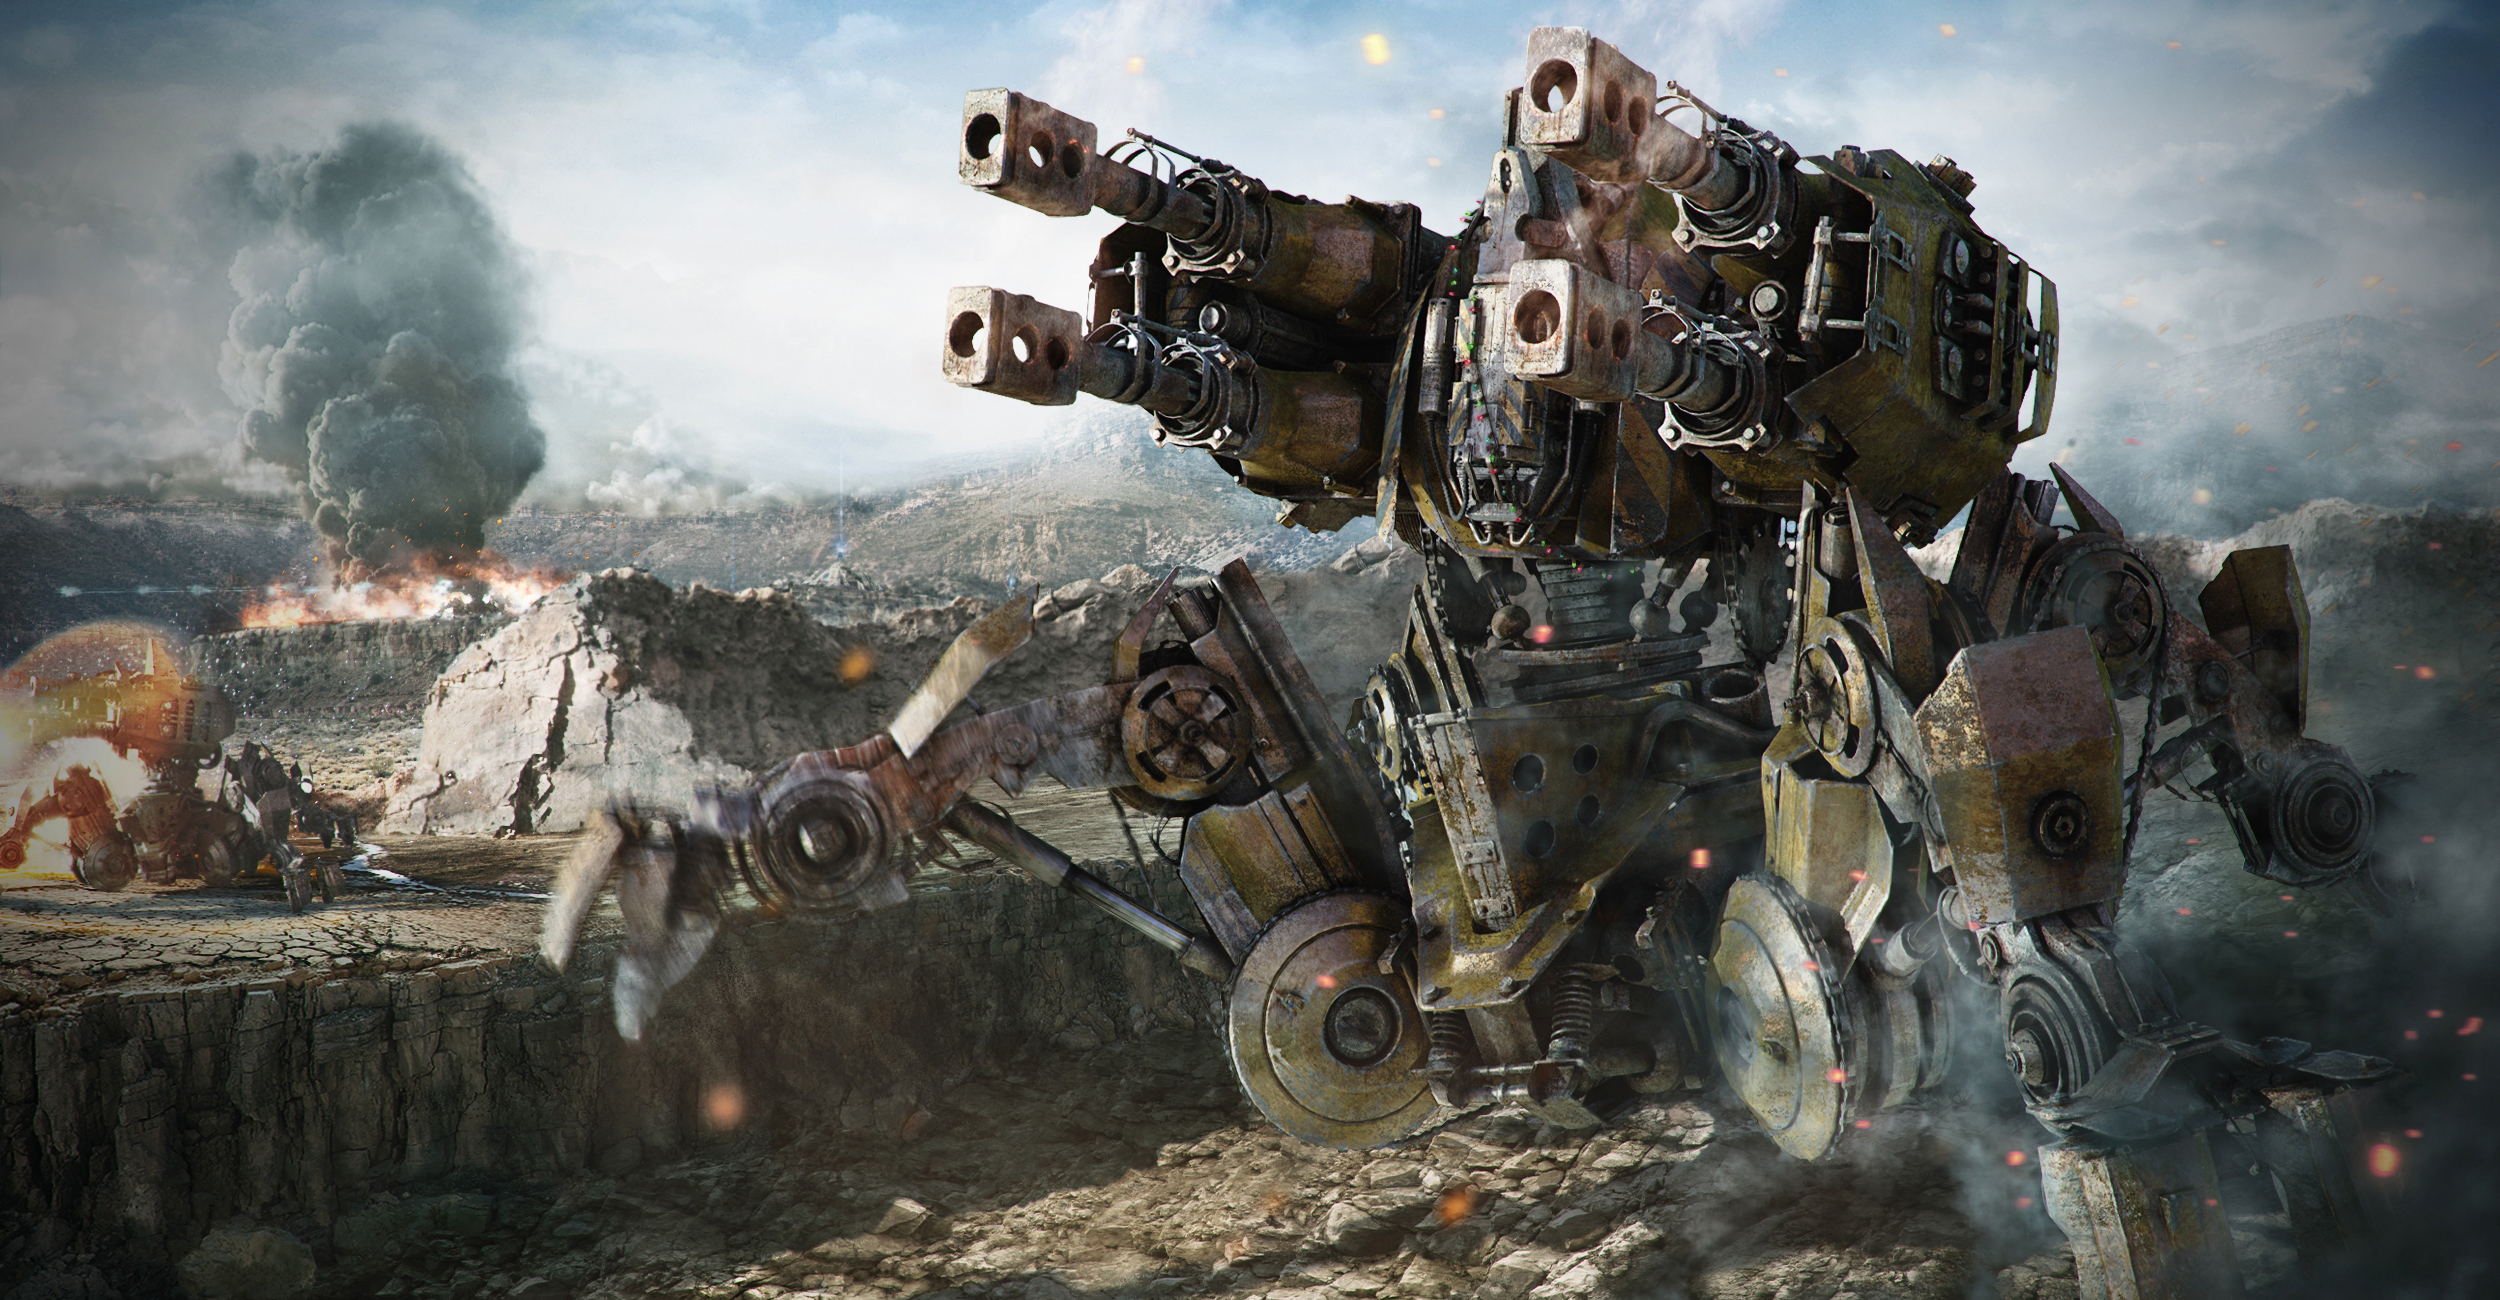 Vehicle Weapon StarCraft Protoss Immortal Cannons Fighting War Smoke Wasteland Science Fiction Chris 2500x1300